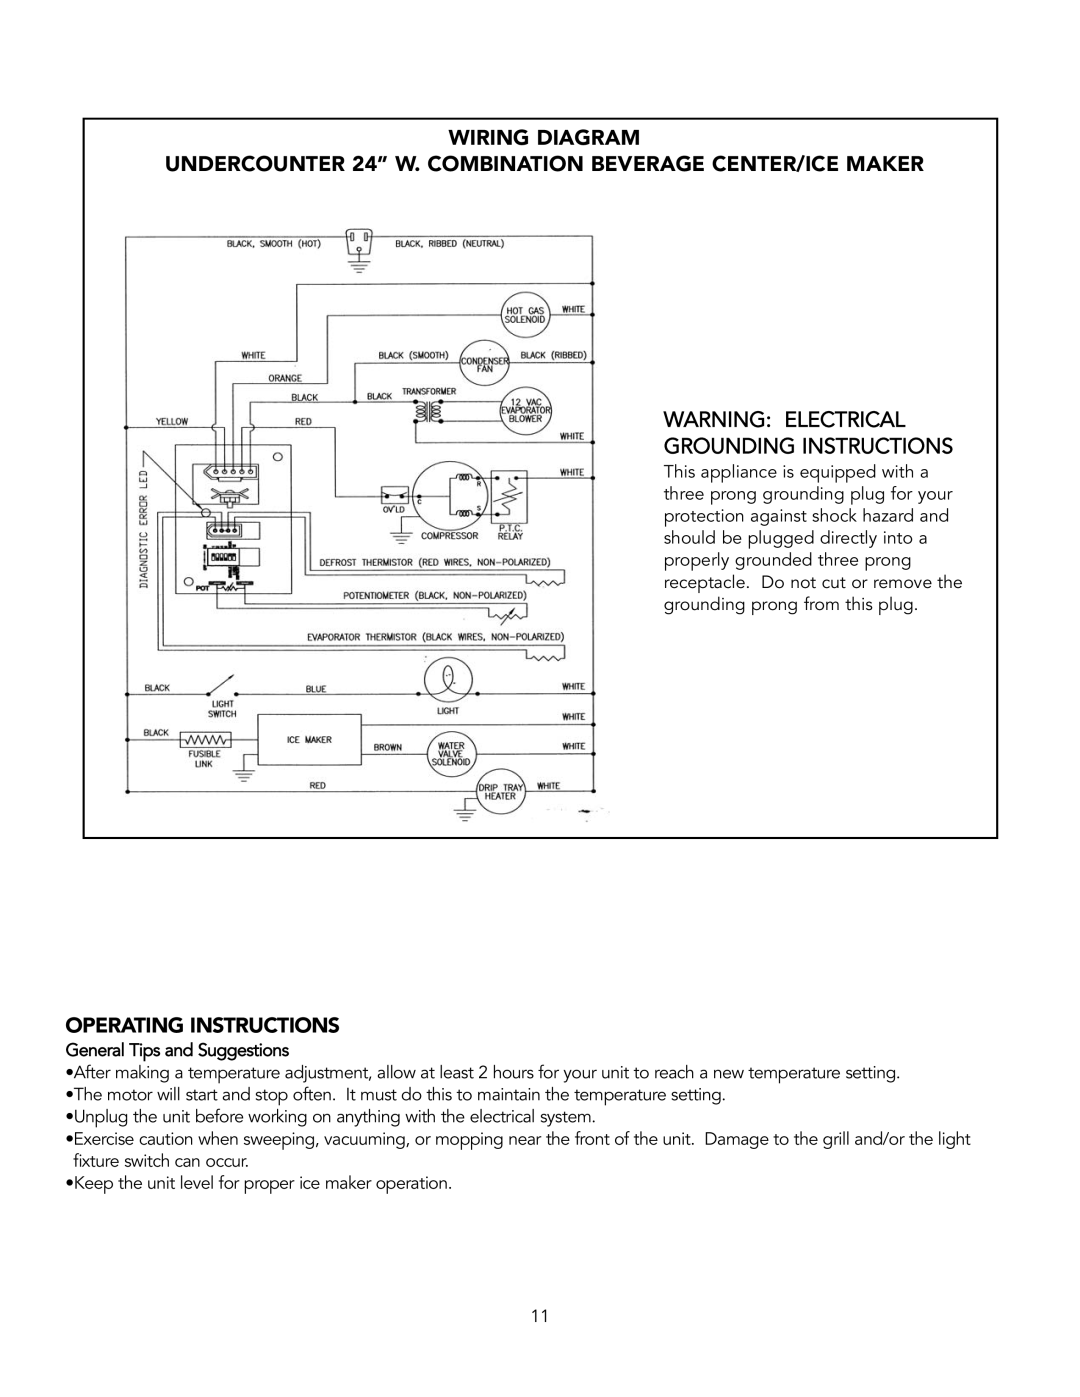 Viking Combination Beverage Center manual Wiring Diagram, UNDERCOUNTER 24” W. COMBINATION BEVERAGE CENTER/ICE MAKER 